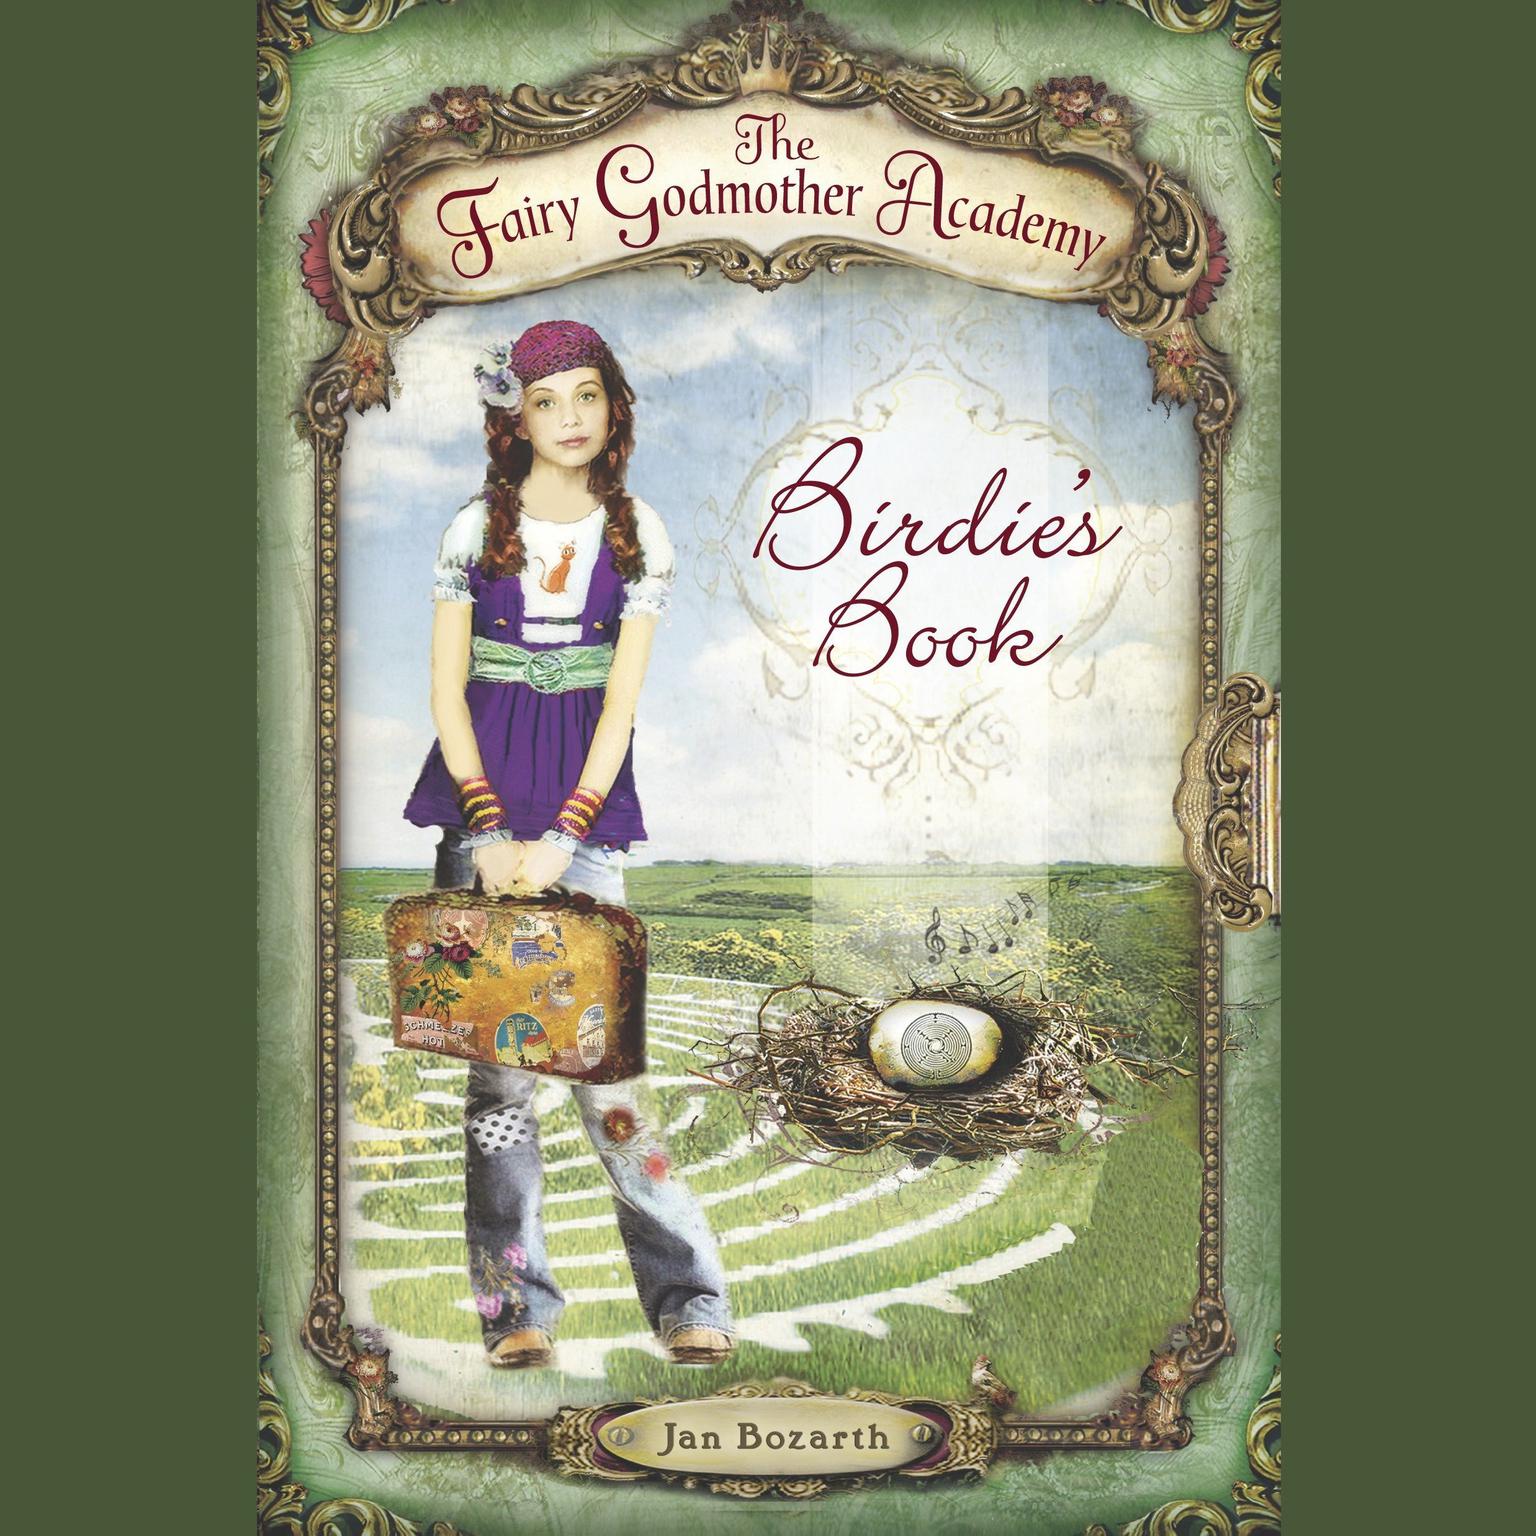 The Fairy Godmother Academy #1: Birdies Book Audiobook, by Jan Bozarth